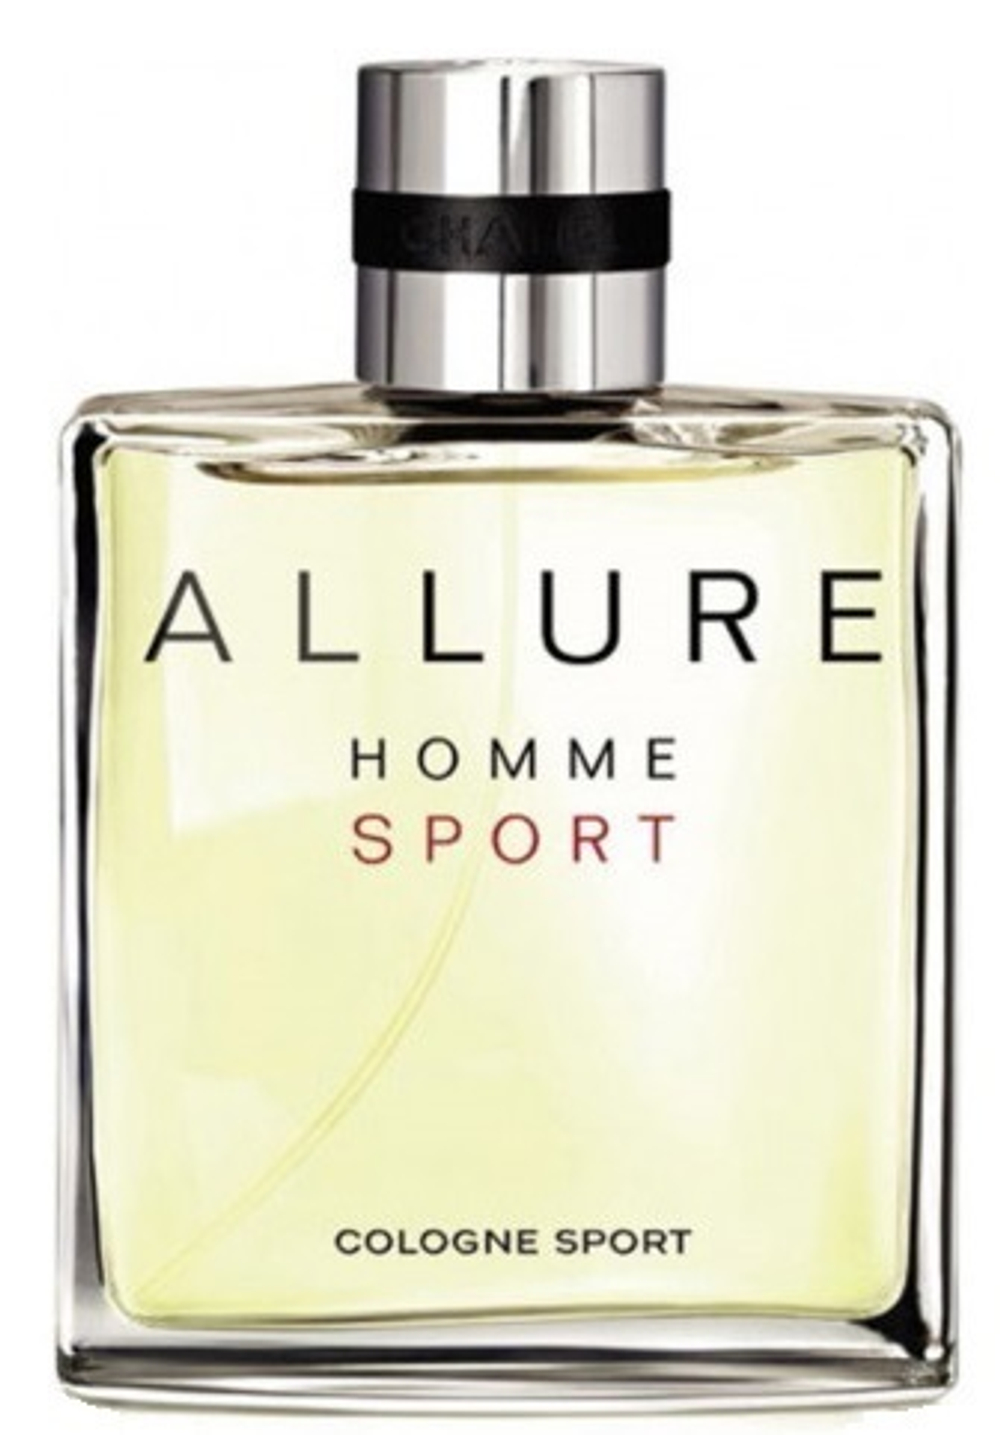 Chanel Allure Homme Sport Cologne EDC - купить по выгодной цене